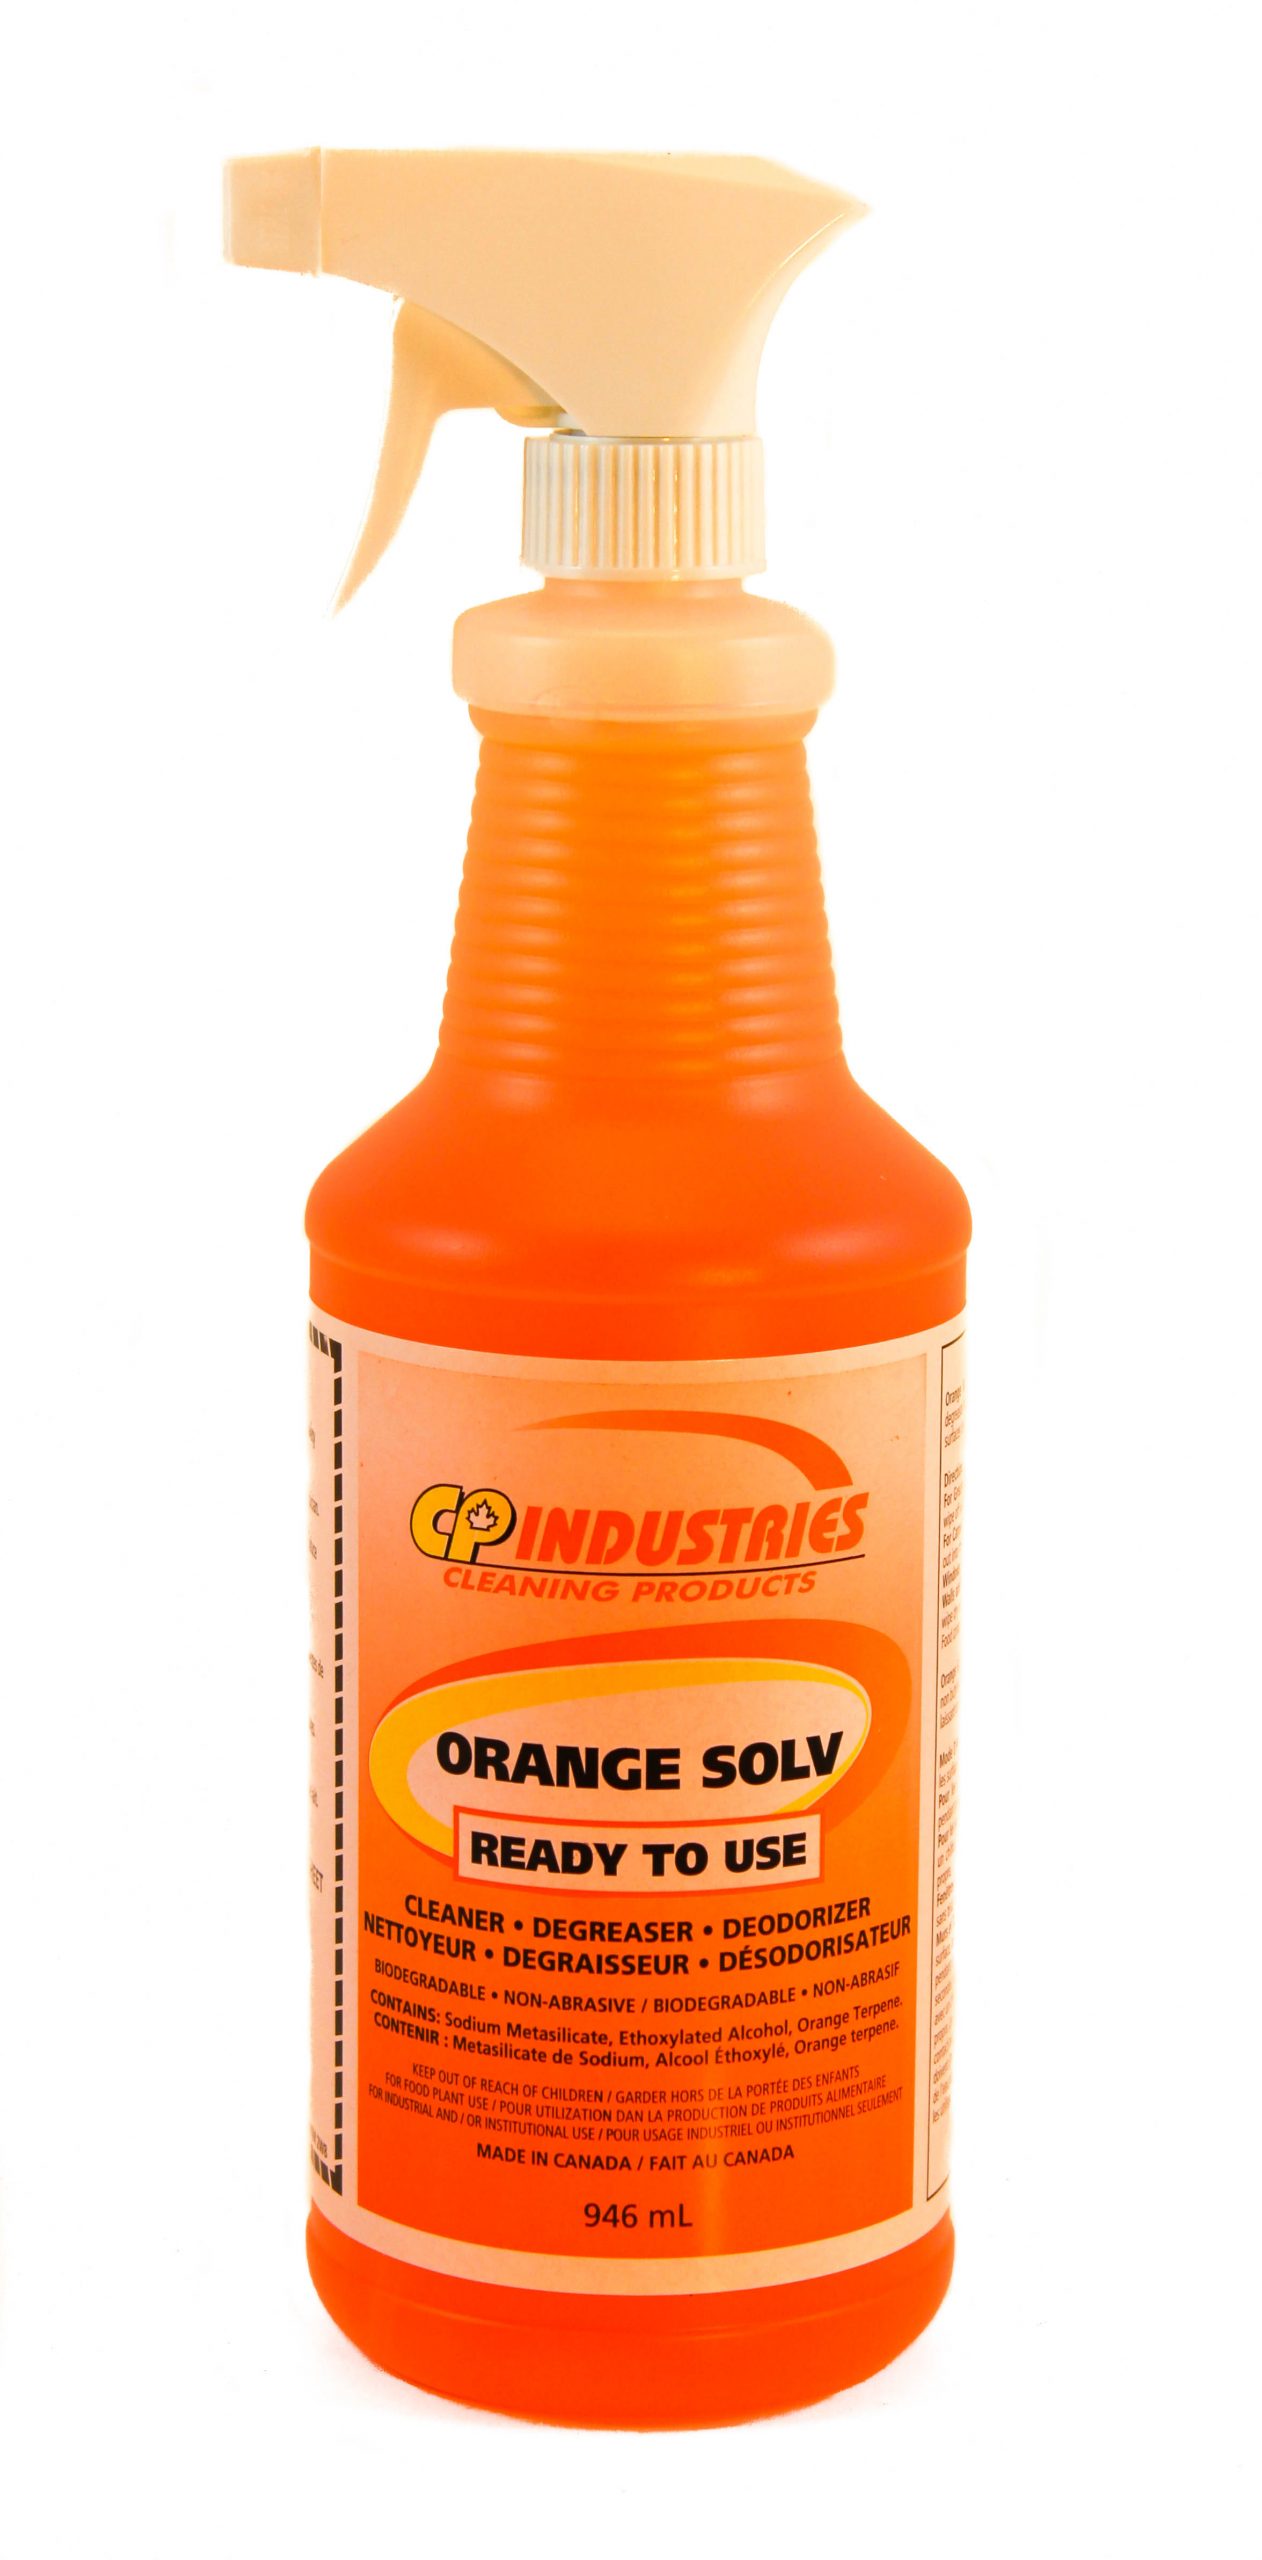 CP Industries Orange Solv RTU, cleaner, degreaser and deodorizer